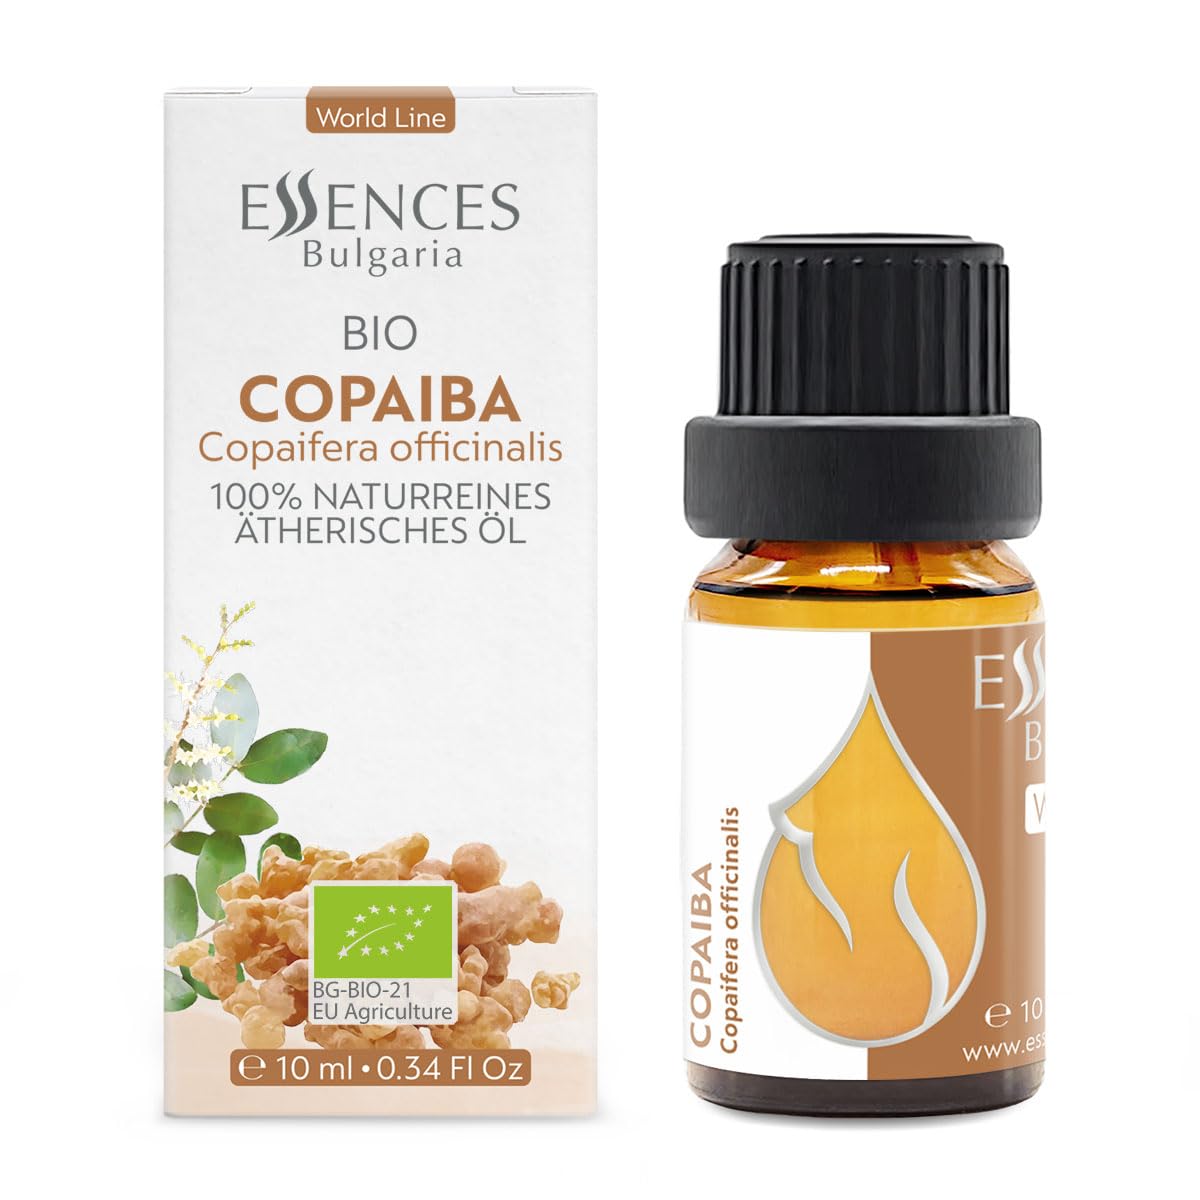 Essences Bulgaria Organic Copaiba Essential Oil 0.34 Fl Oz 10ml Copaifera officinalis - 100% Pure Natural